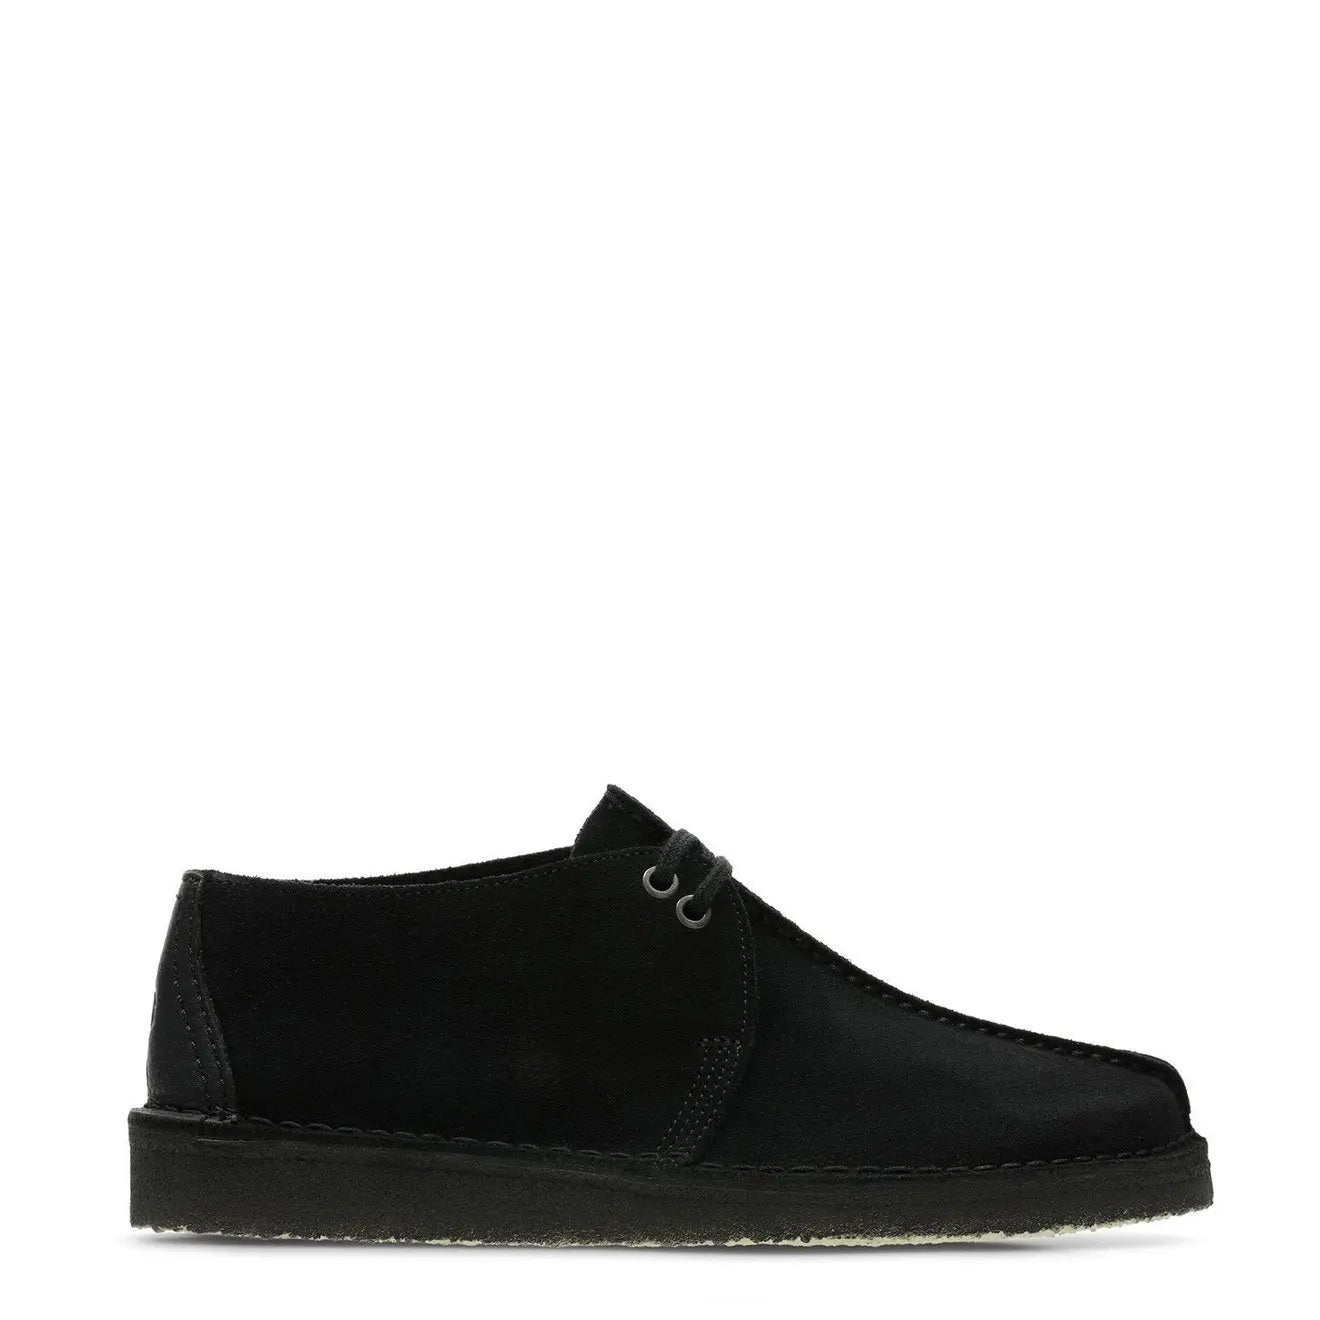 Clarks Originals Desert Trek Shoes Black Suede - Yards Store Menswear